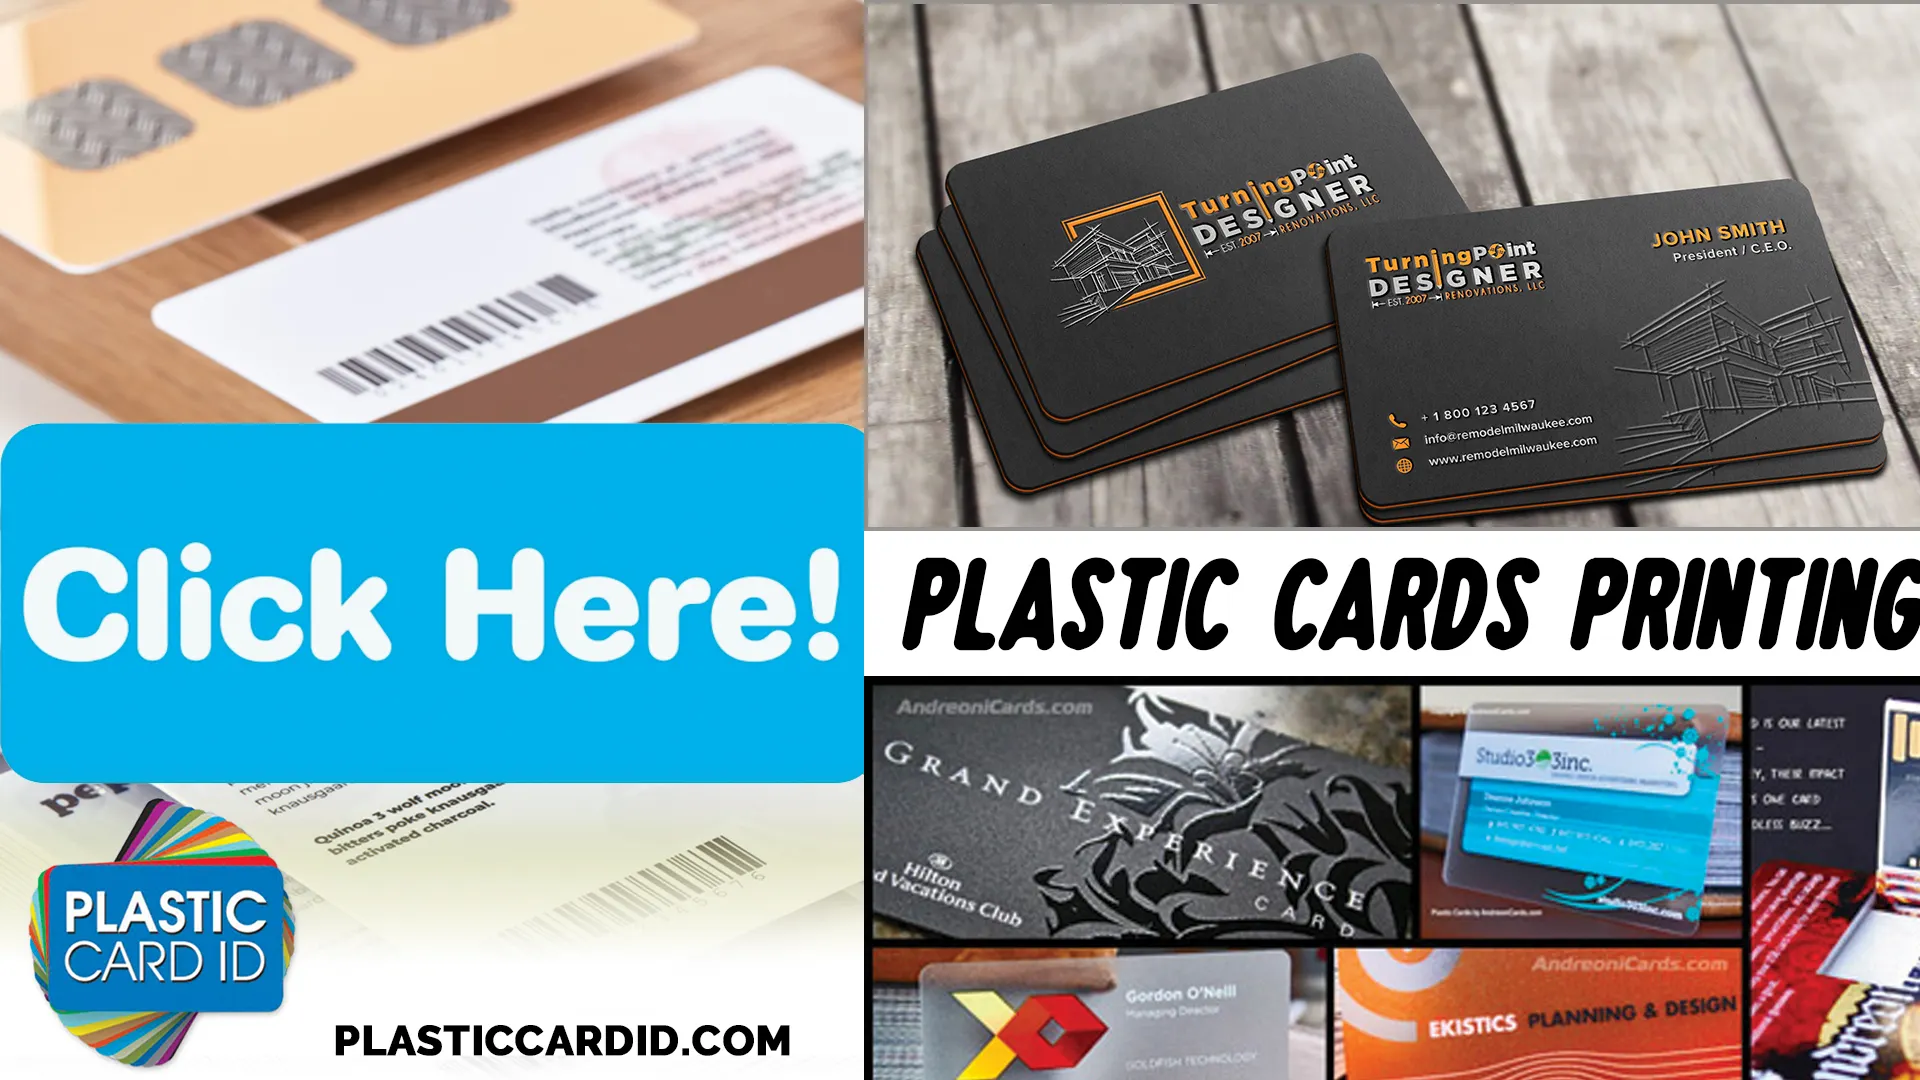 Maximizing Print Quality with Plastic Card ID
